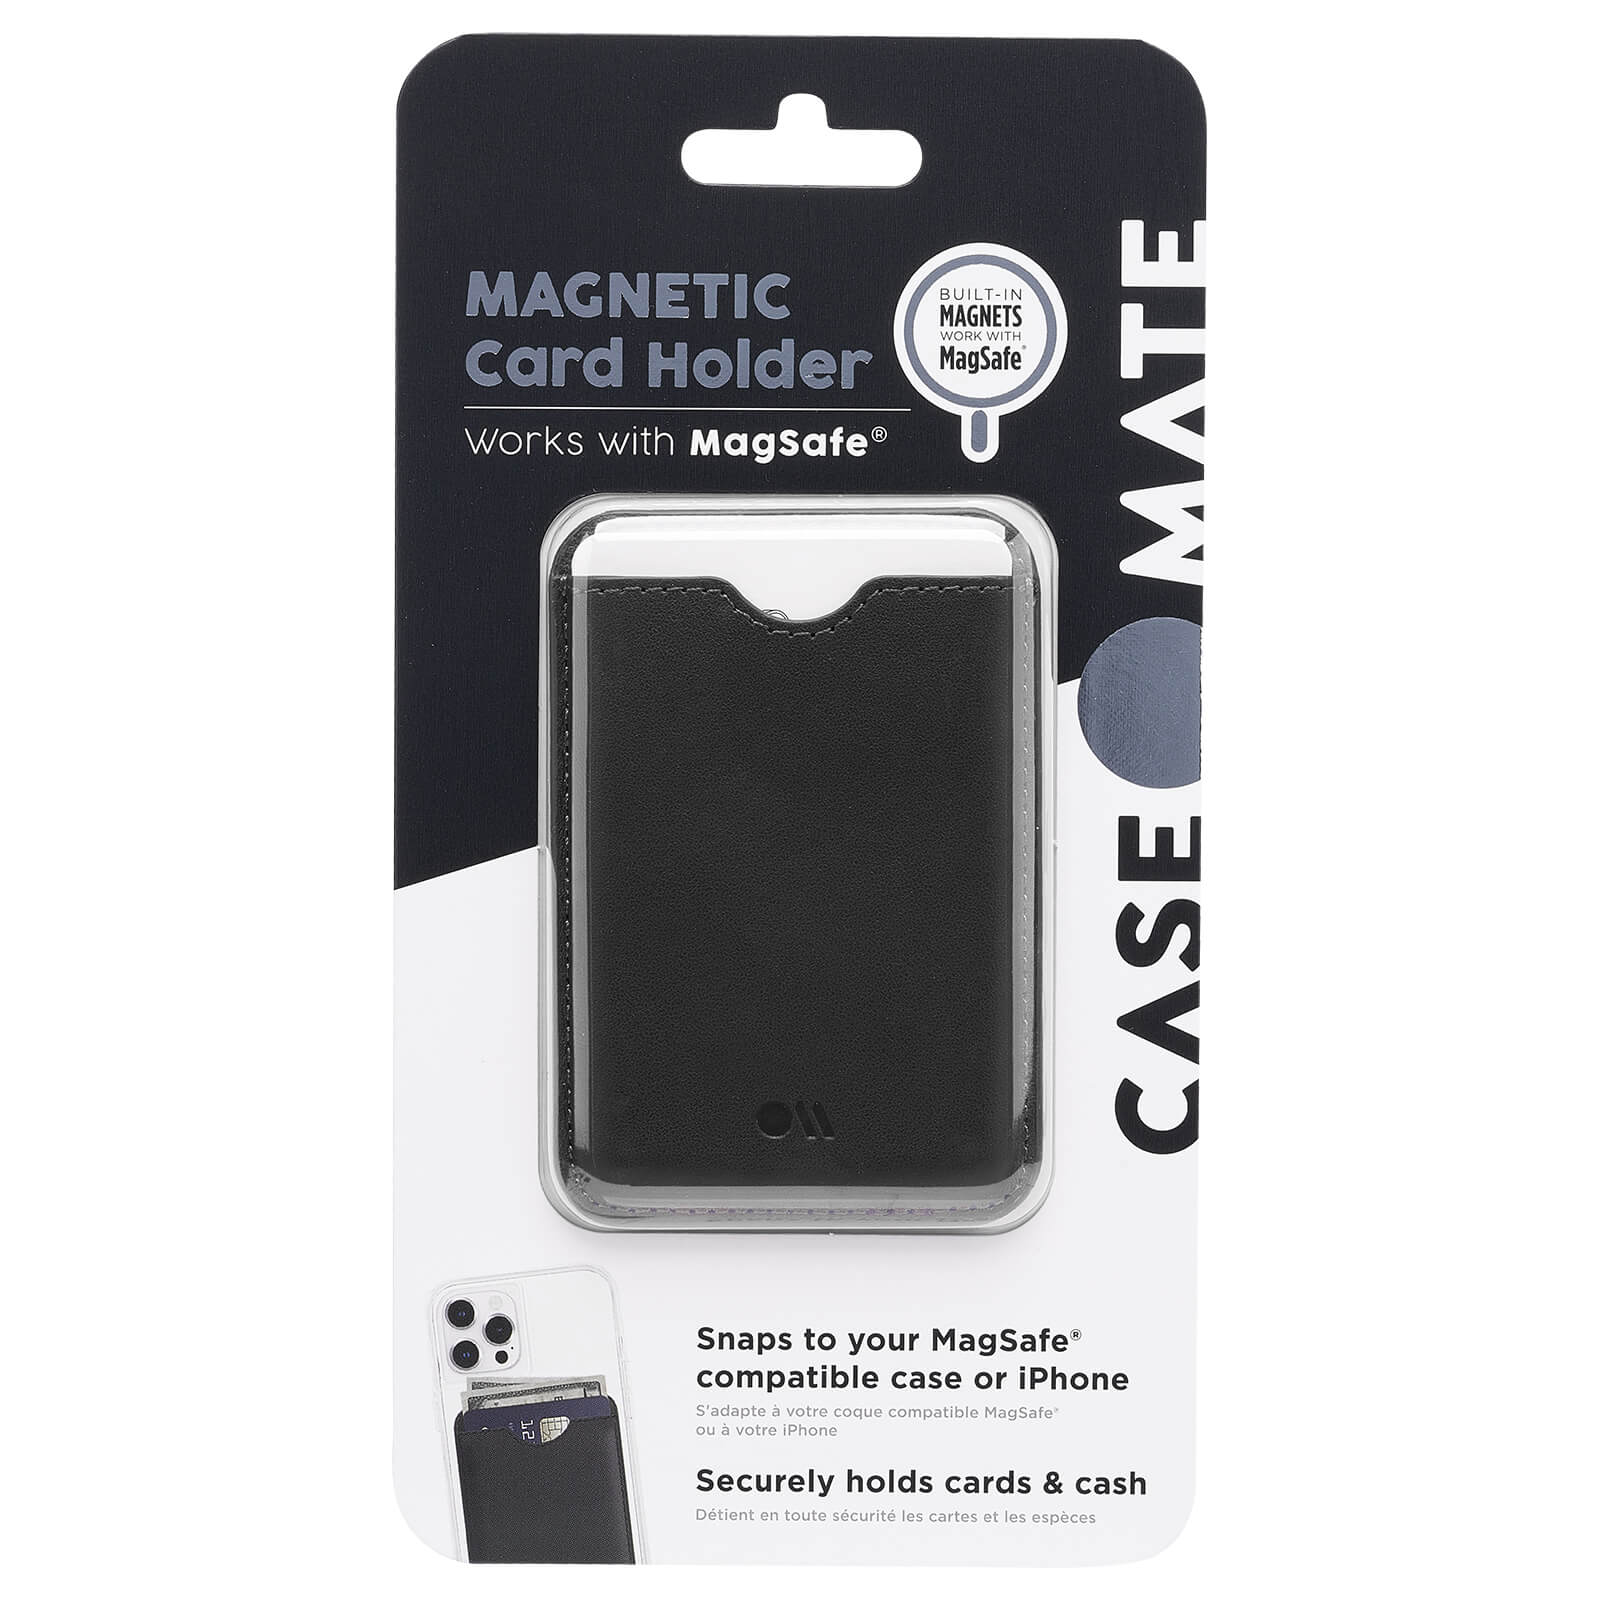 Magnetic Card Holder works with MagSafe. Built in Magnets work with MagSafe. Snaps to your MagSafe compatible case or iPhone. Securely holds cards & cash. color::Black